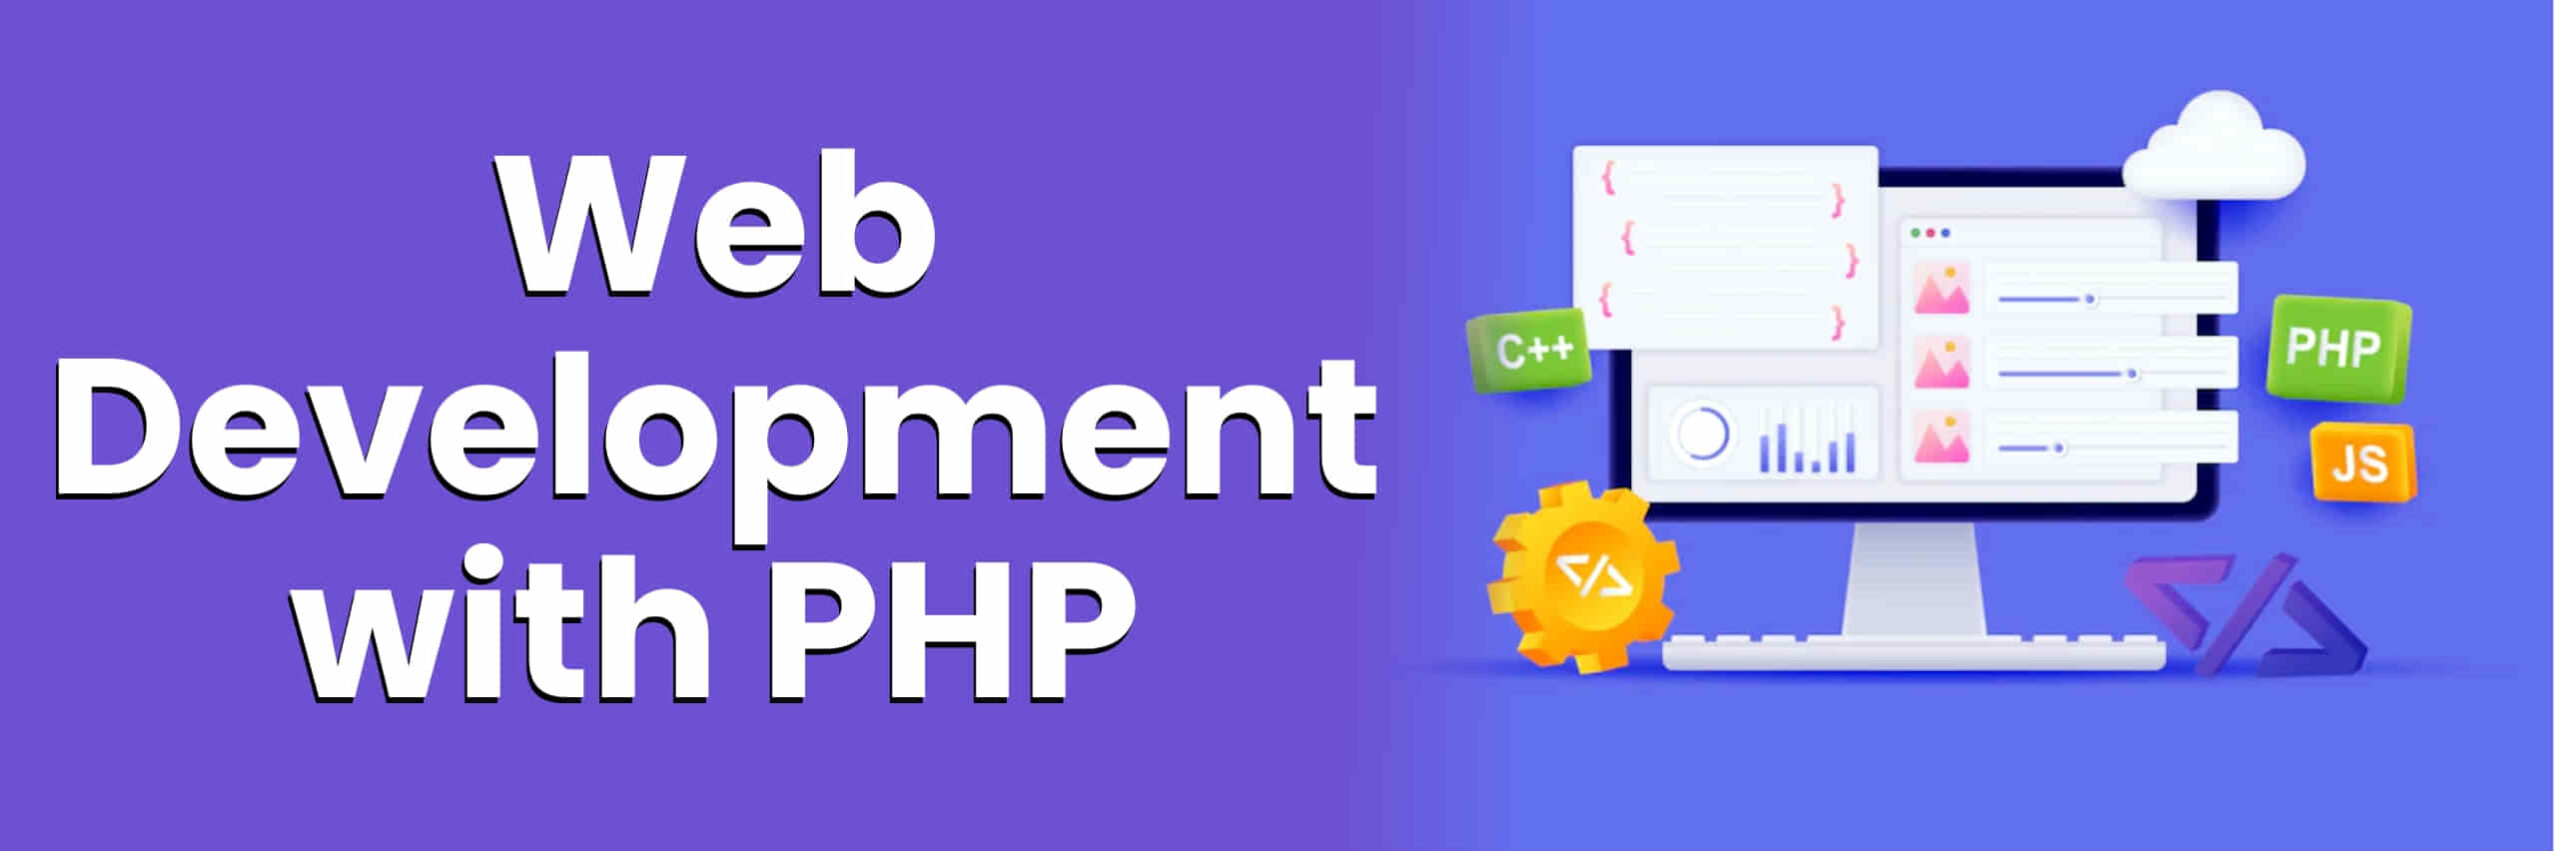 PHP Web Development Online Training PHP Web Development Training in Noida PHP Web Development Training in Delhi